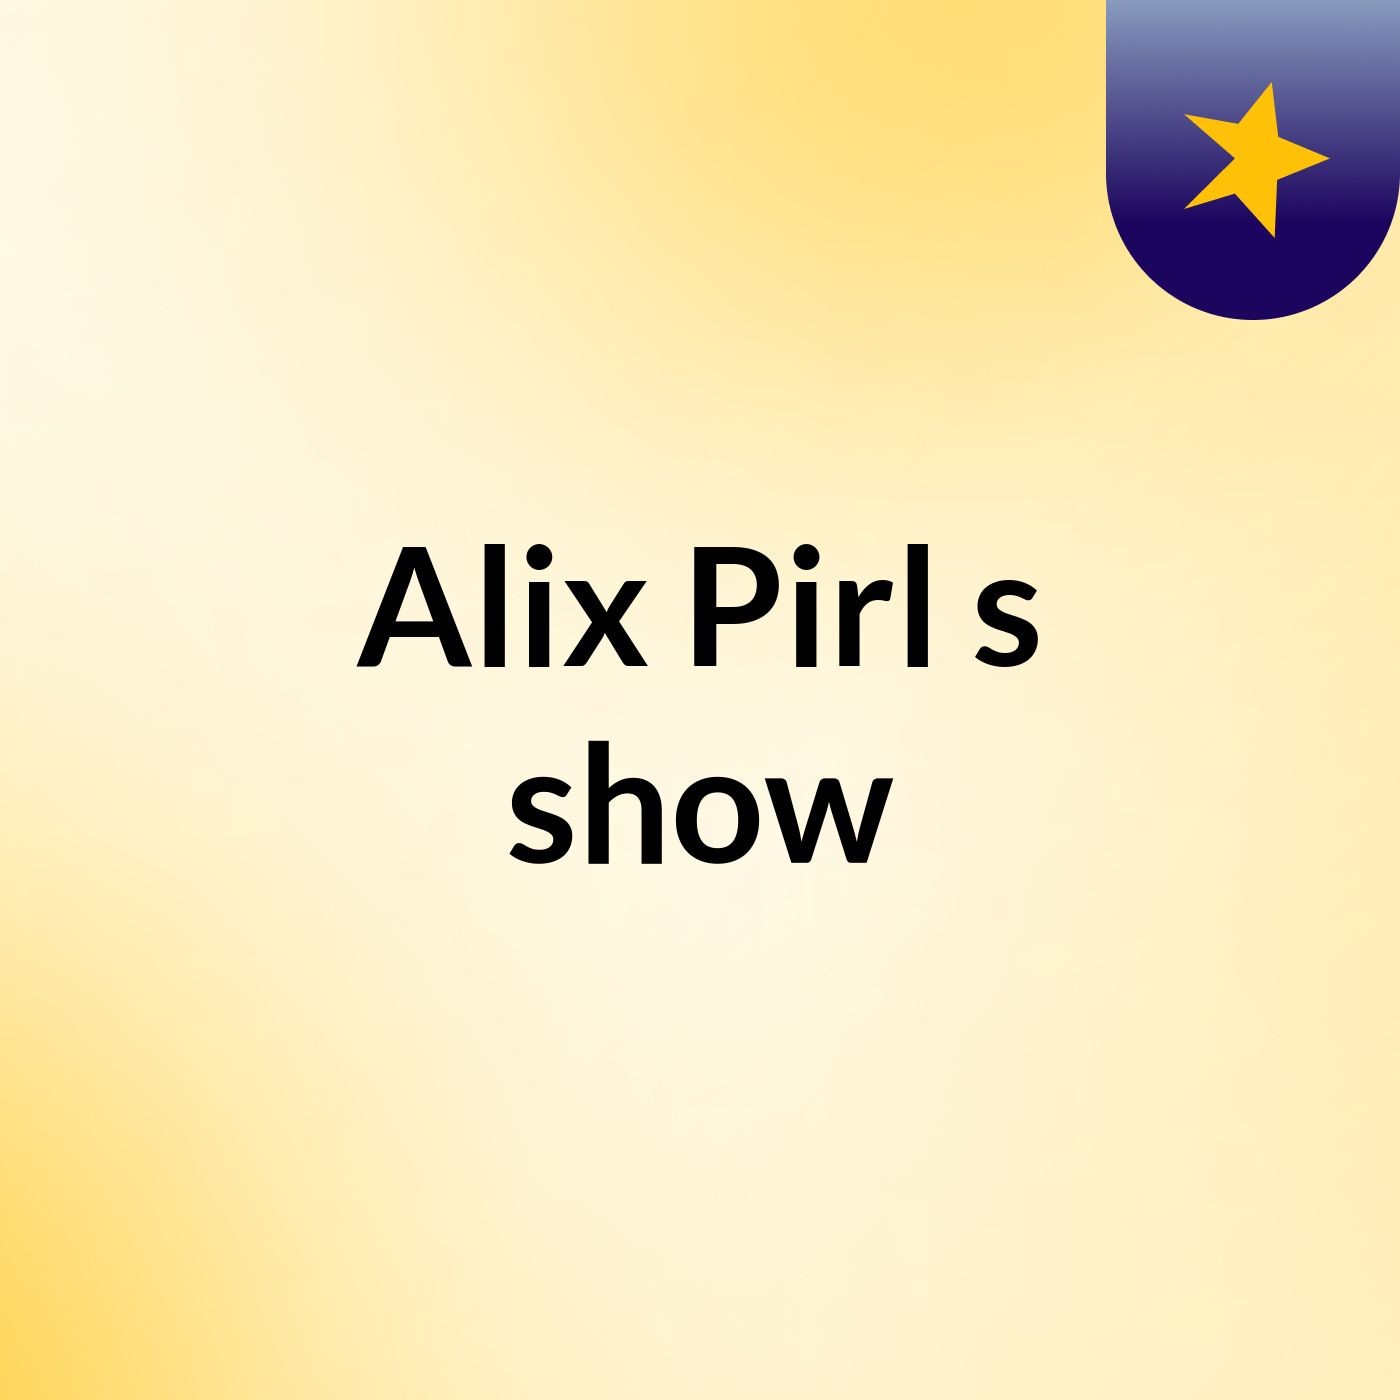 Alix Pirl's show